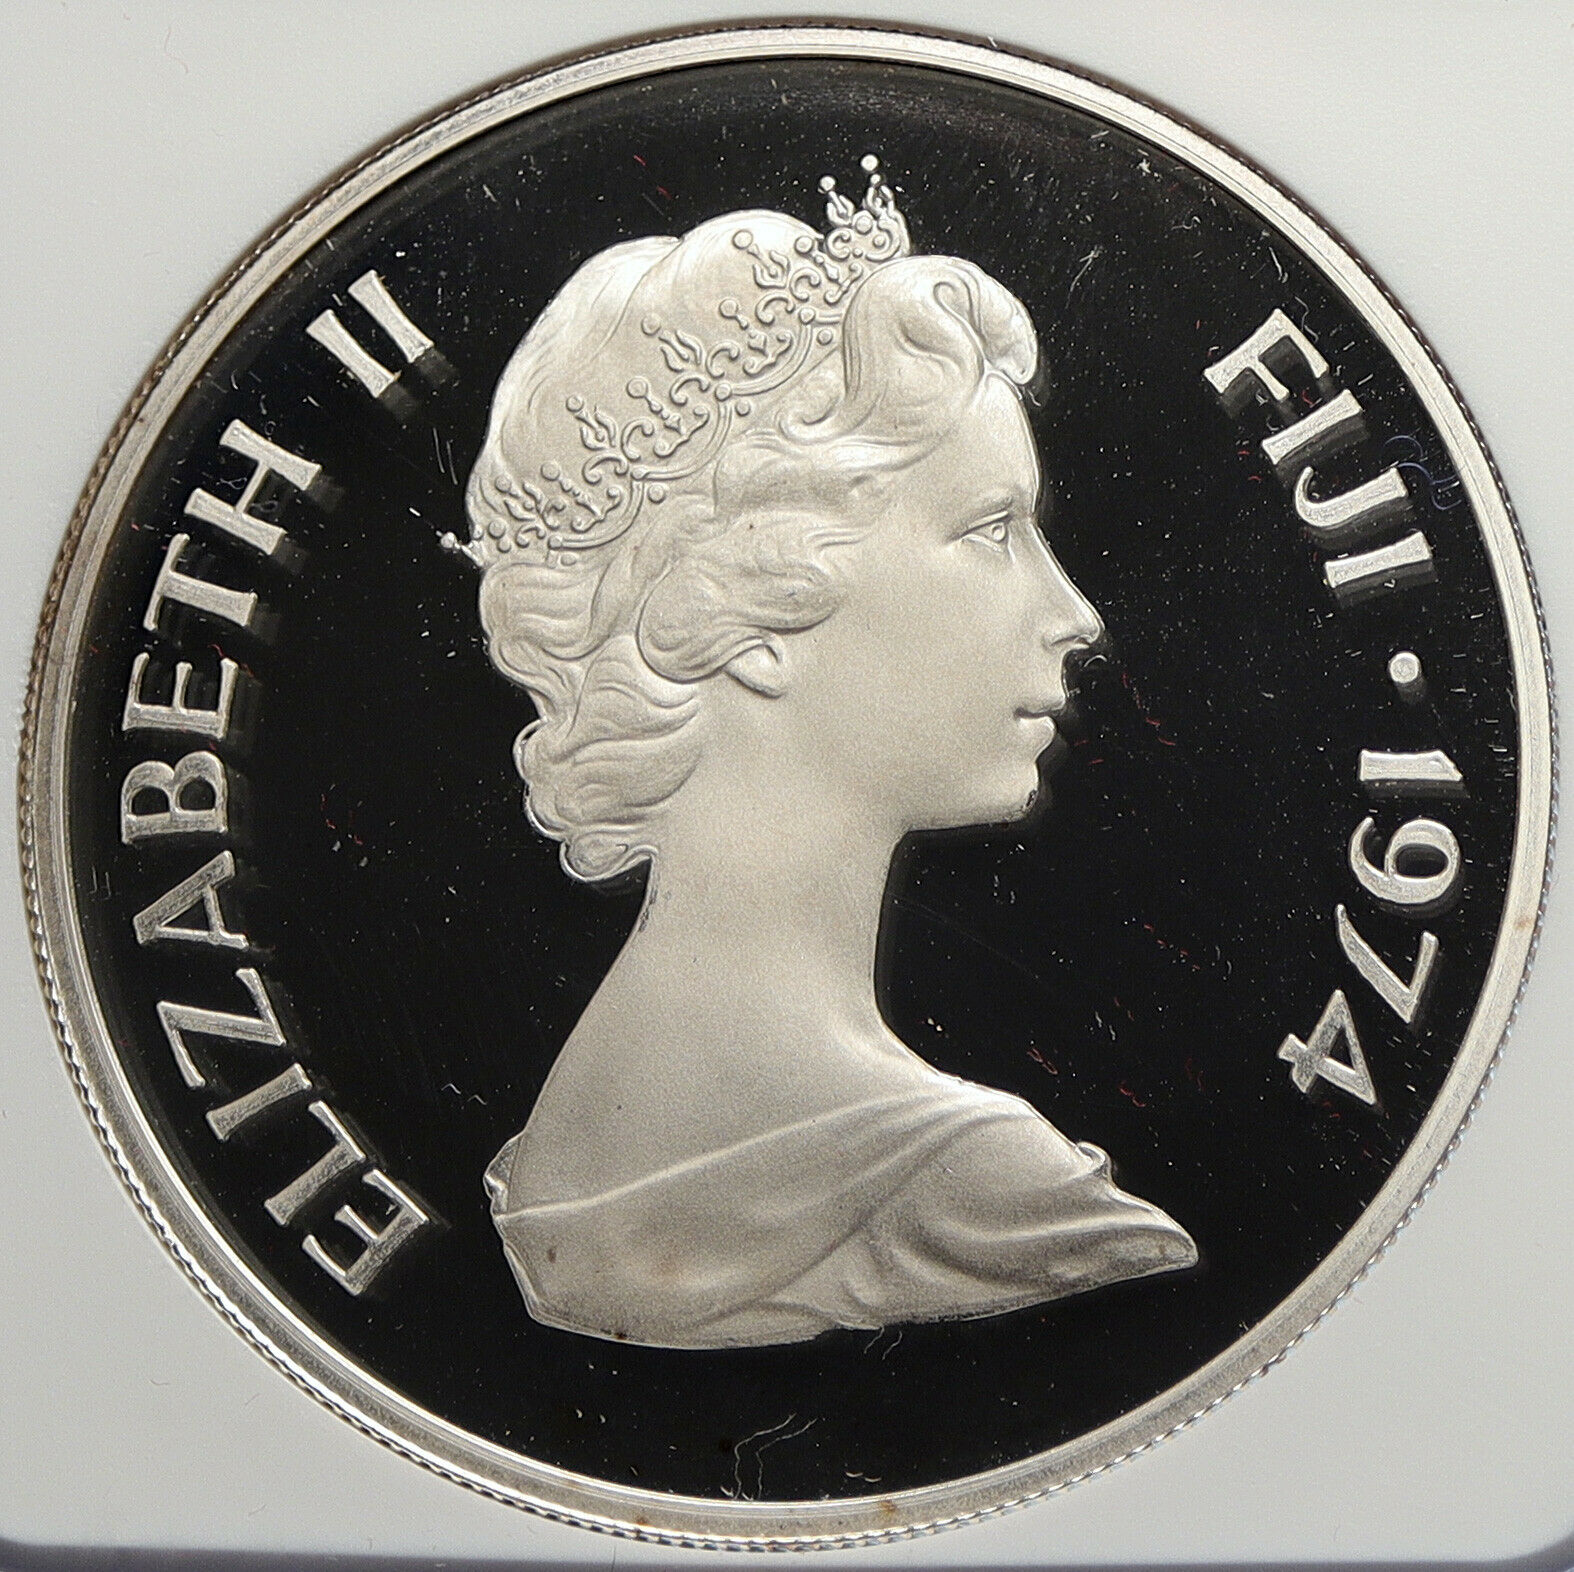 1974 FIJI UK Queen Elizabeth II King Cokabau Proof Silver $25 Coin NGC i106278